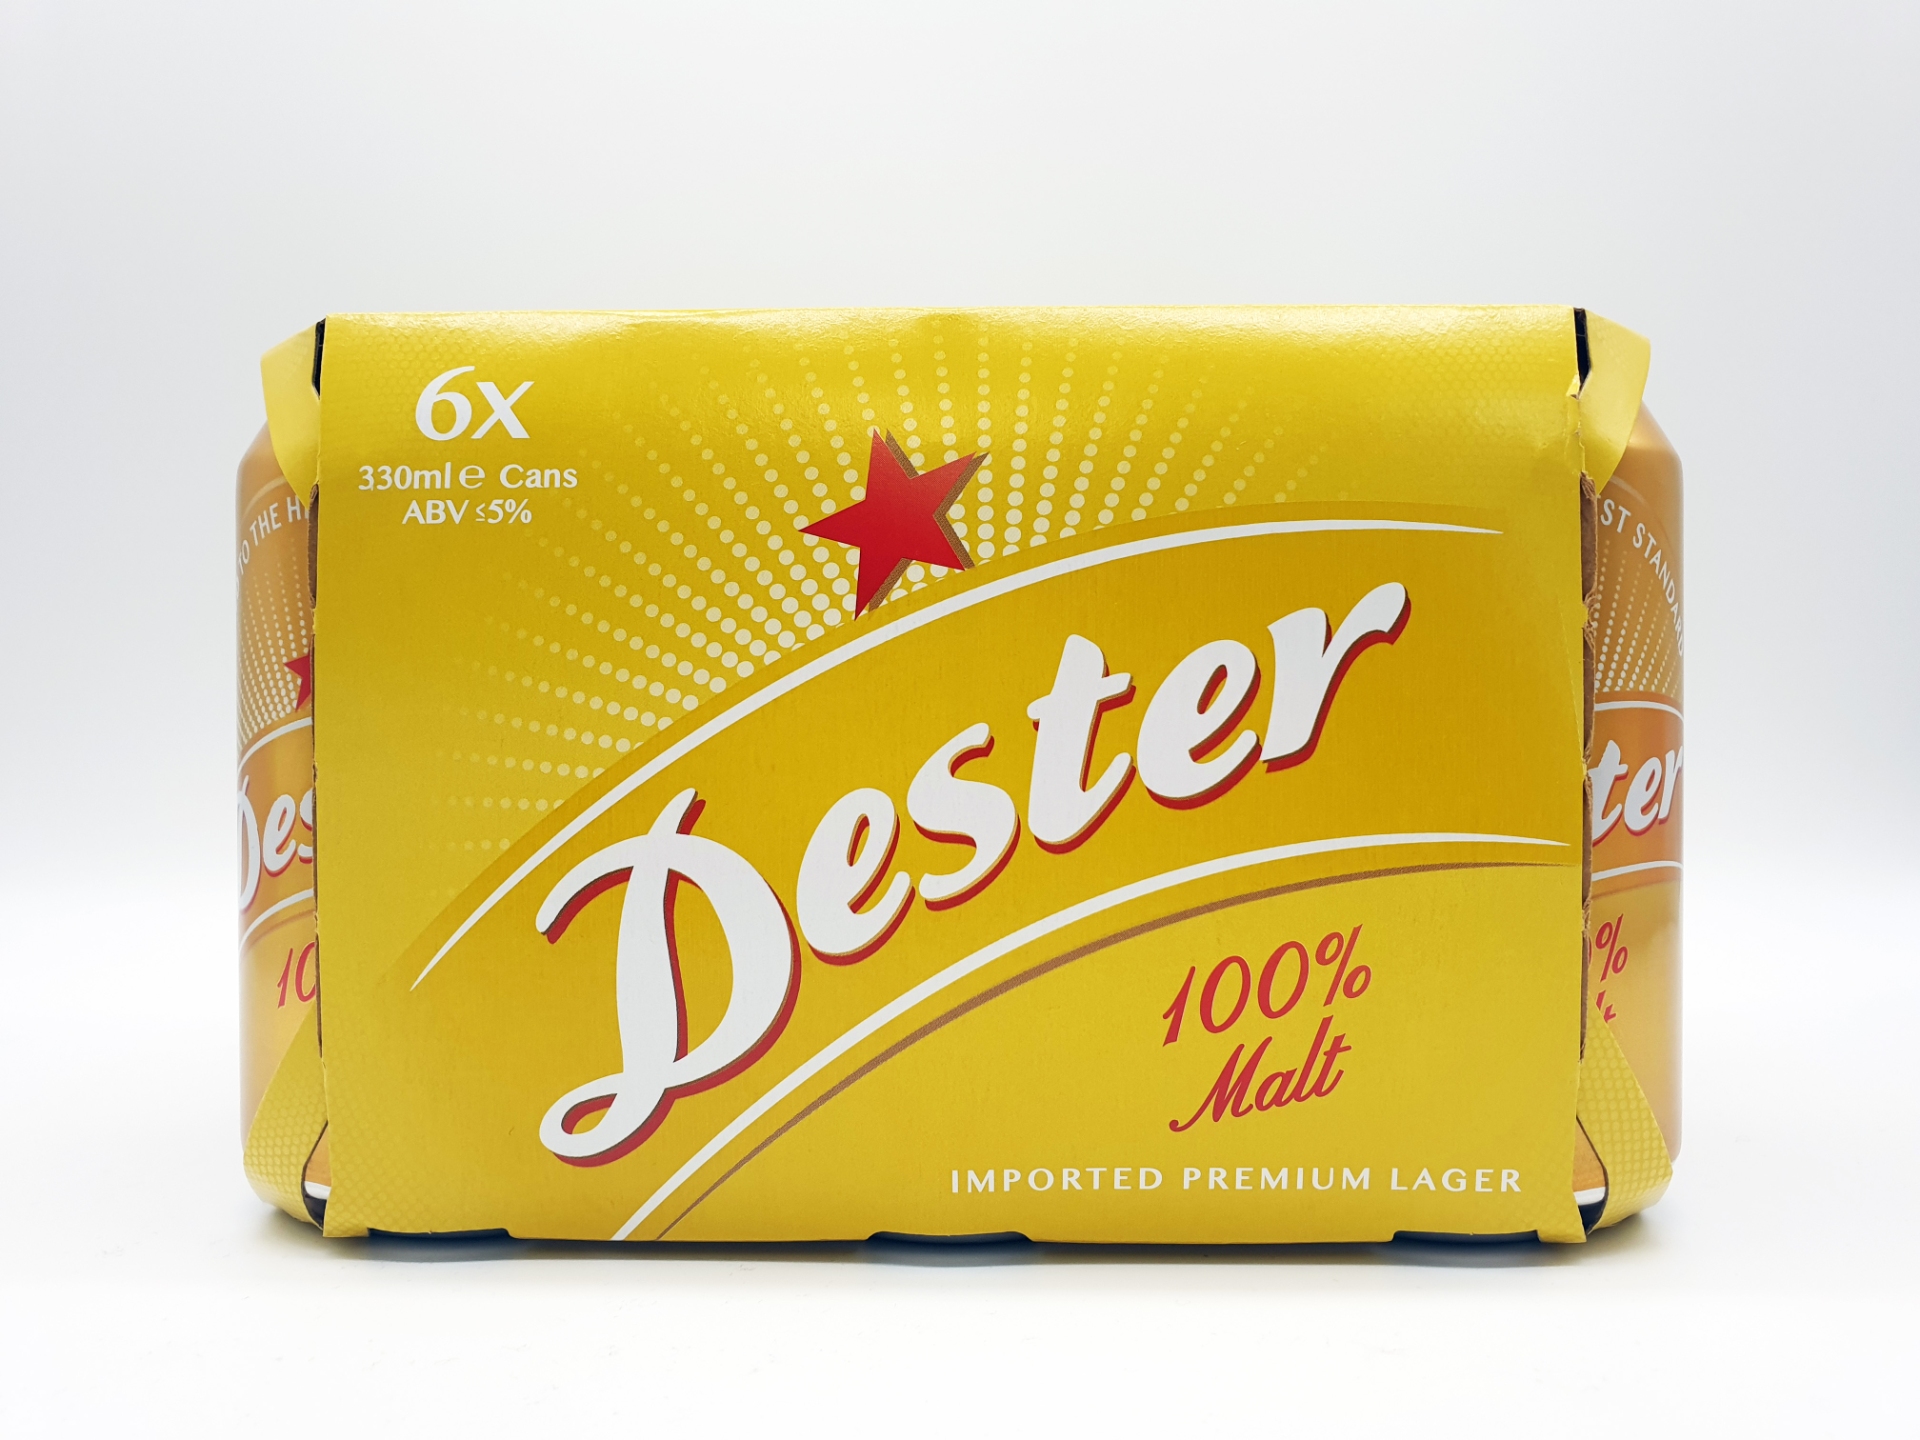 Dester Gold 100% Malt Can Beer (6 cans x 330ml)